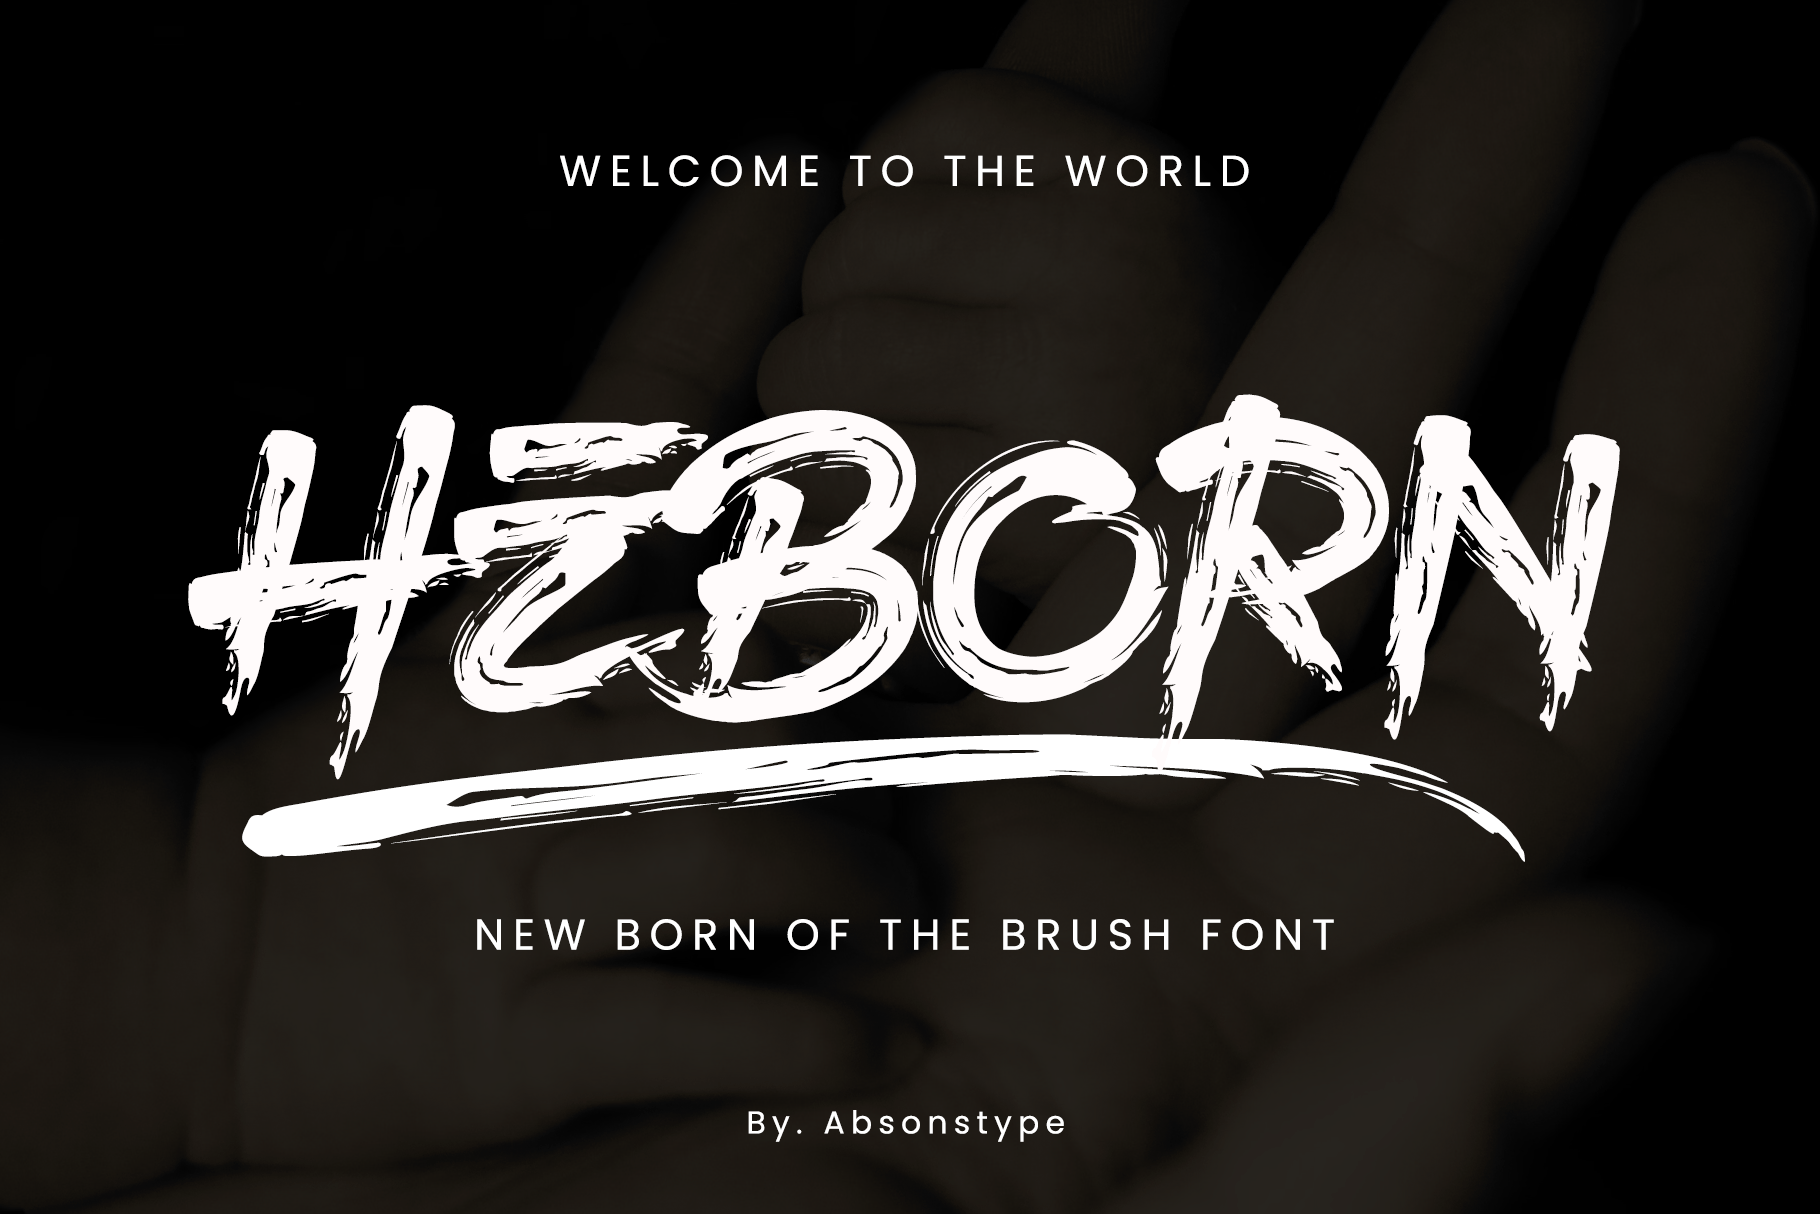 Heborn